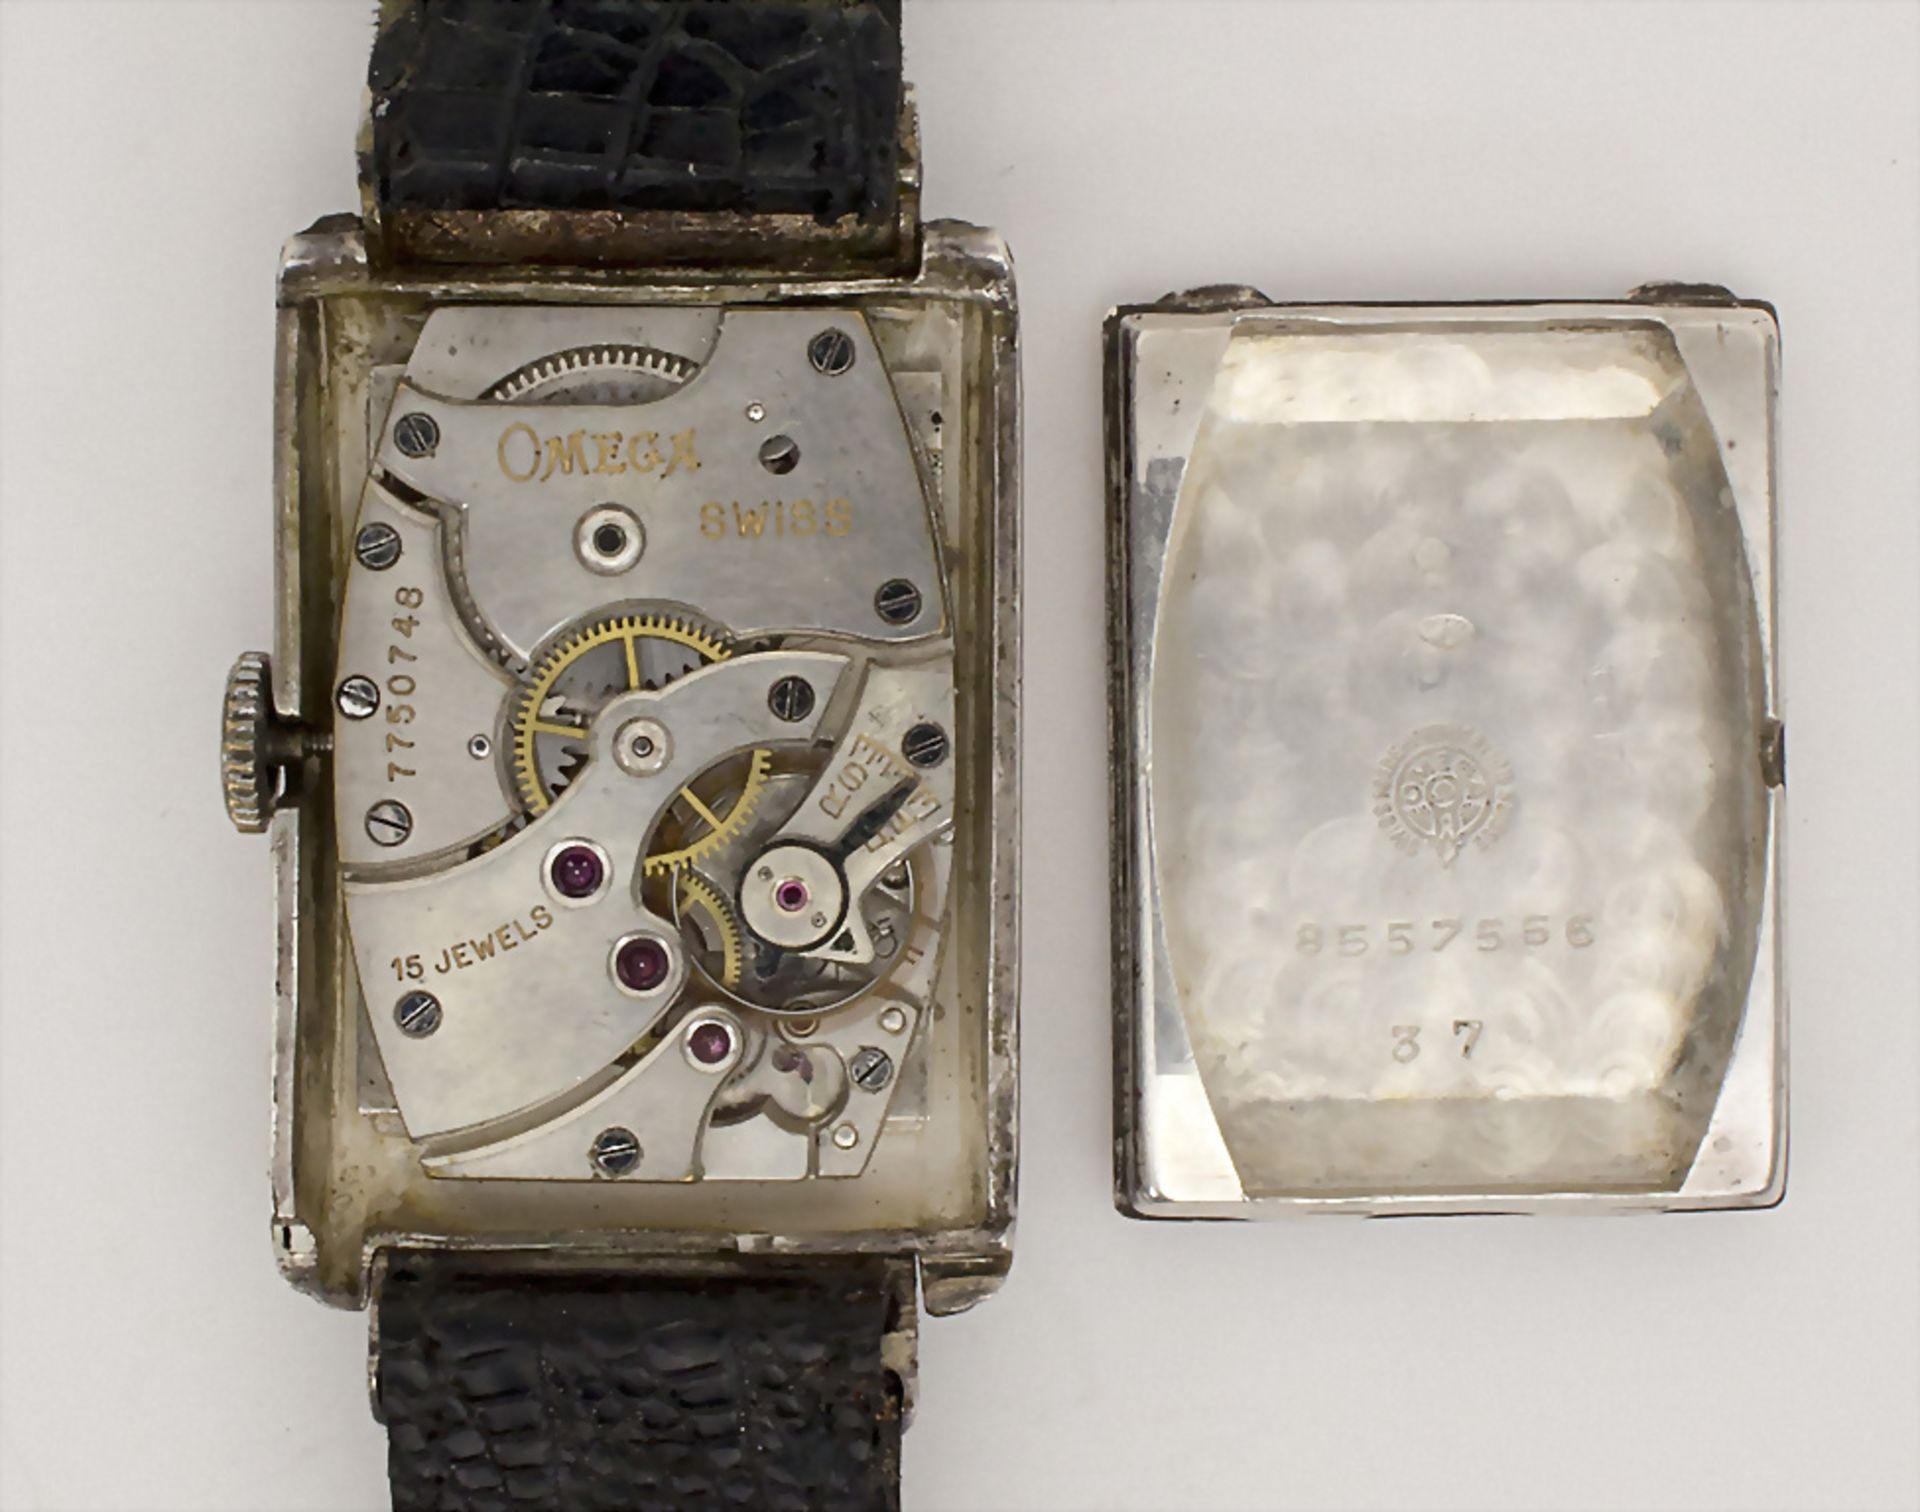 Herrenarmbanduhr / A men's watch, Omega, Swiss/Schweiz, um 1930 - Image 2 of 3